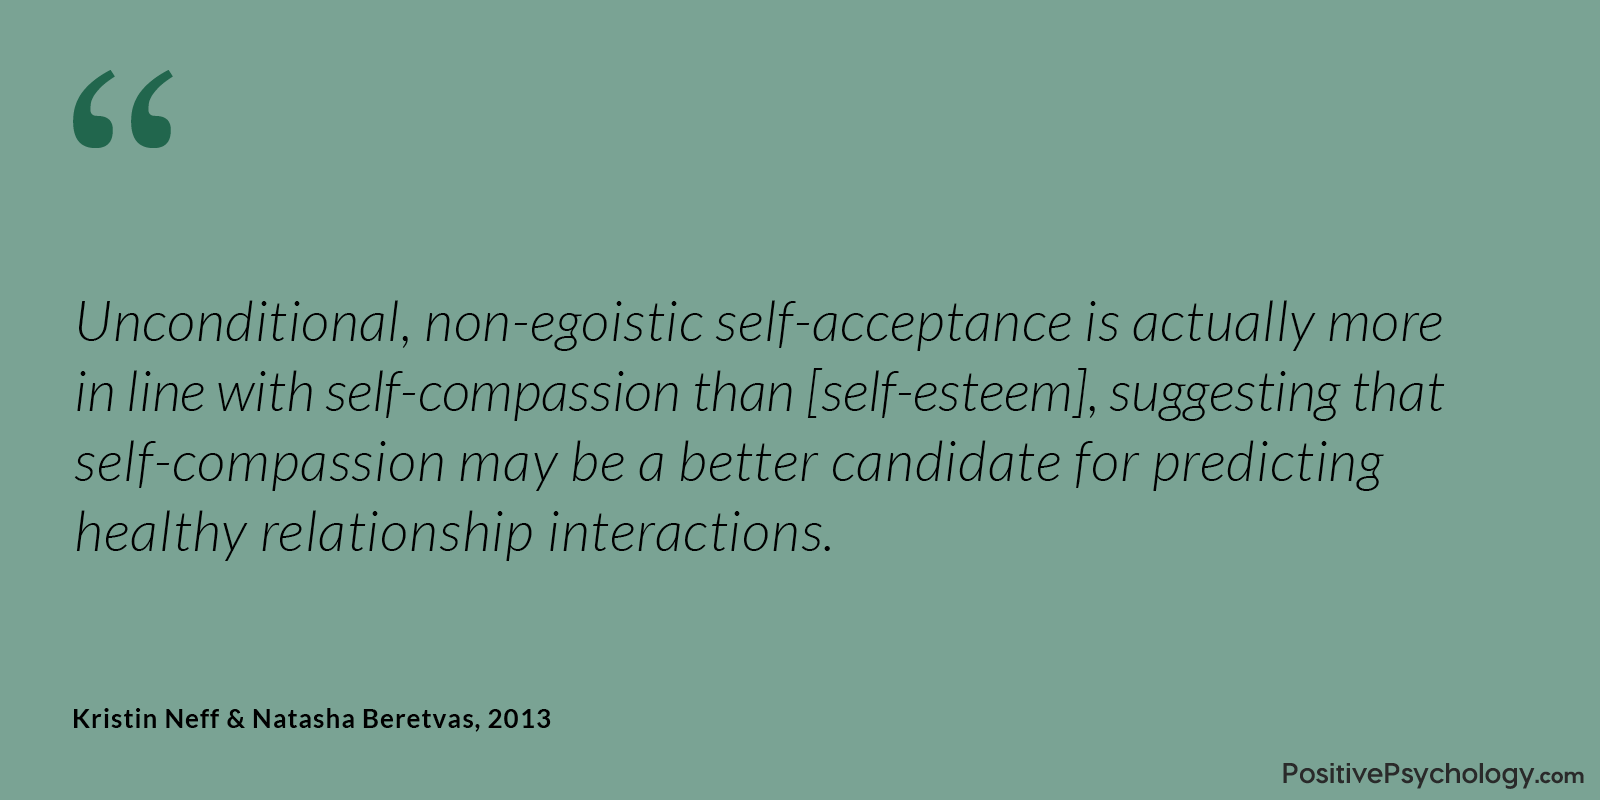 Unconditional self-acceptance